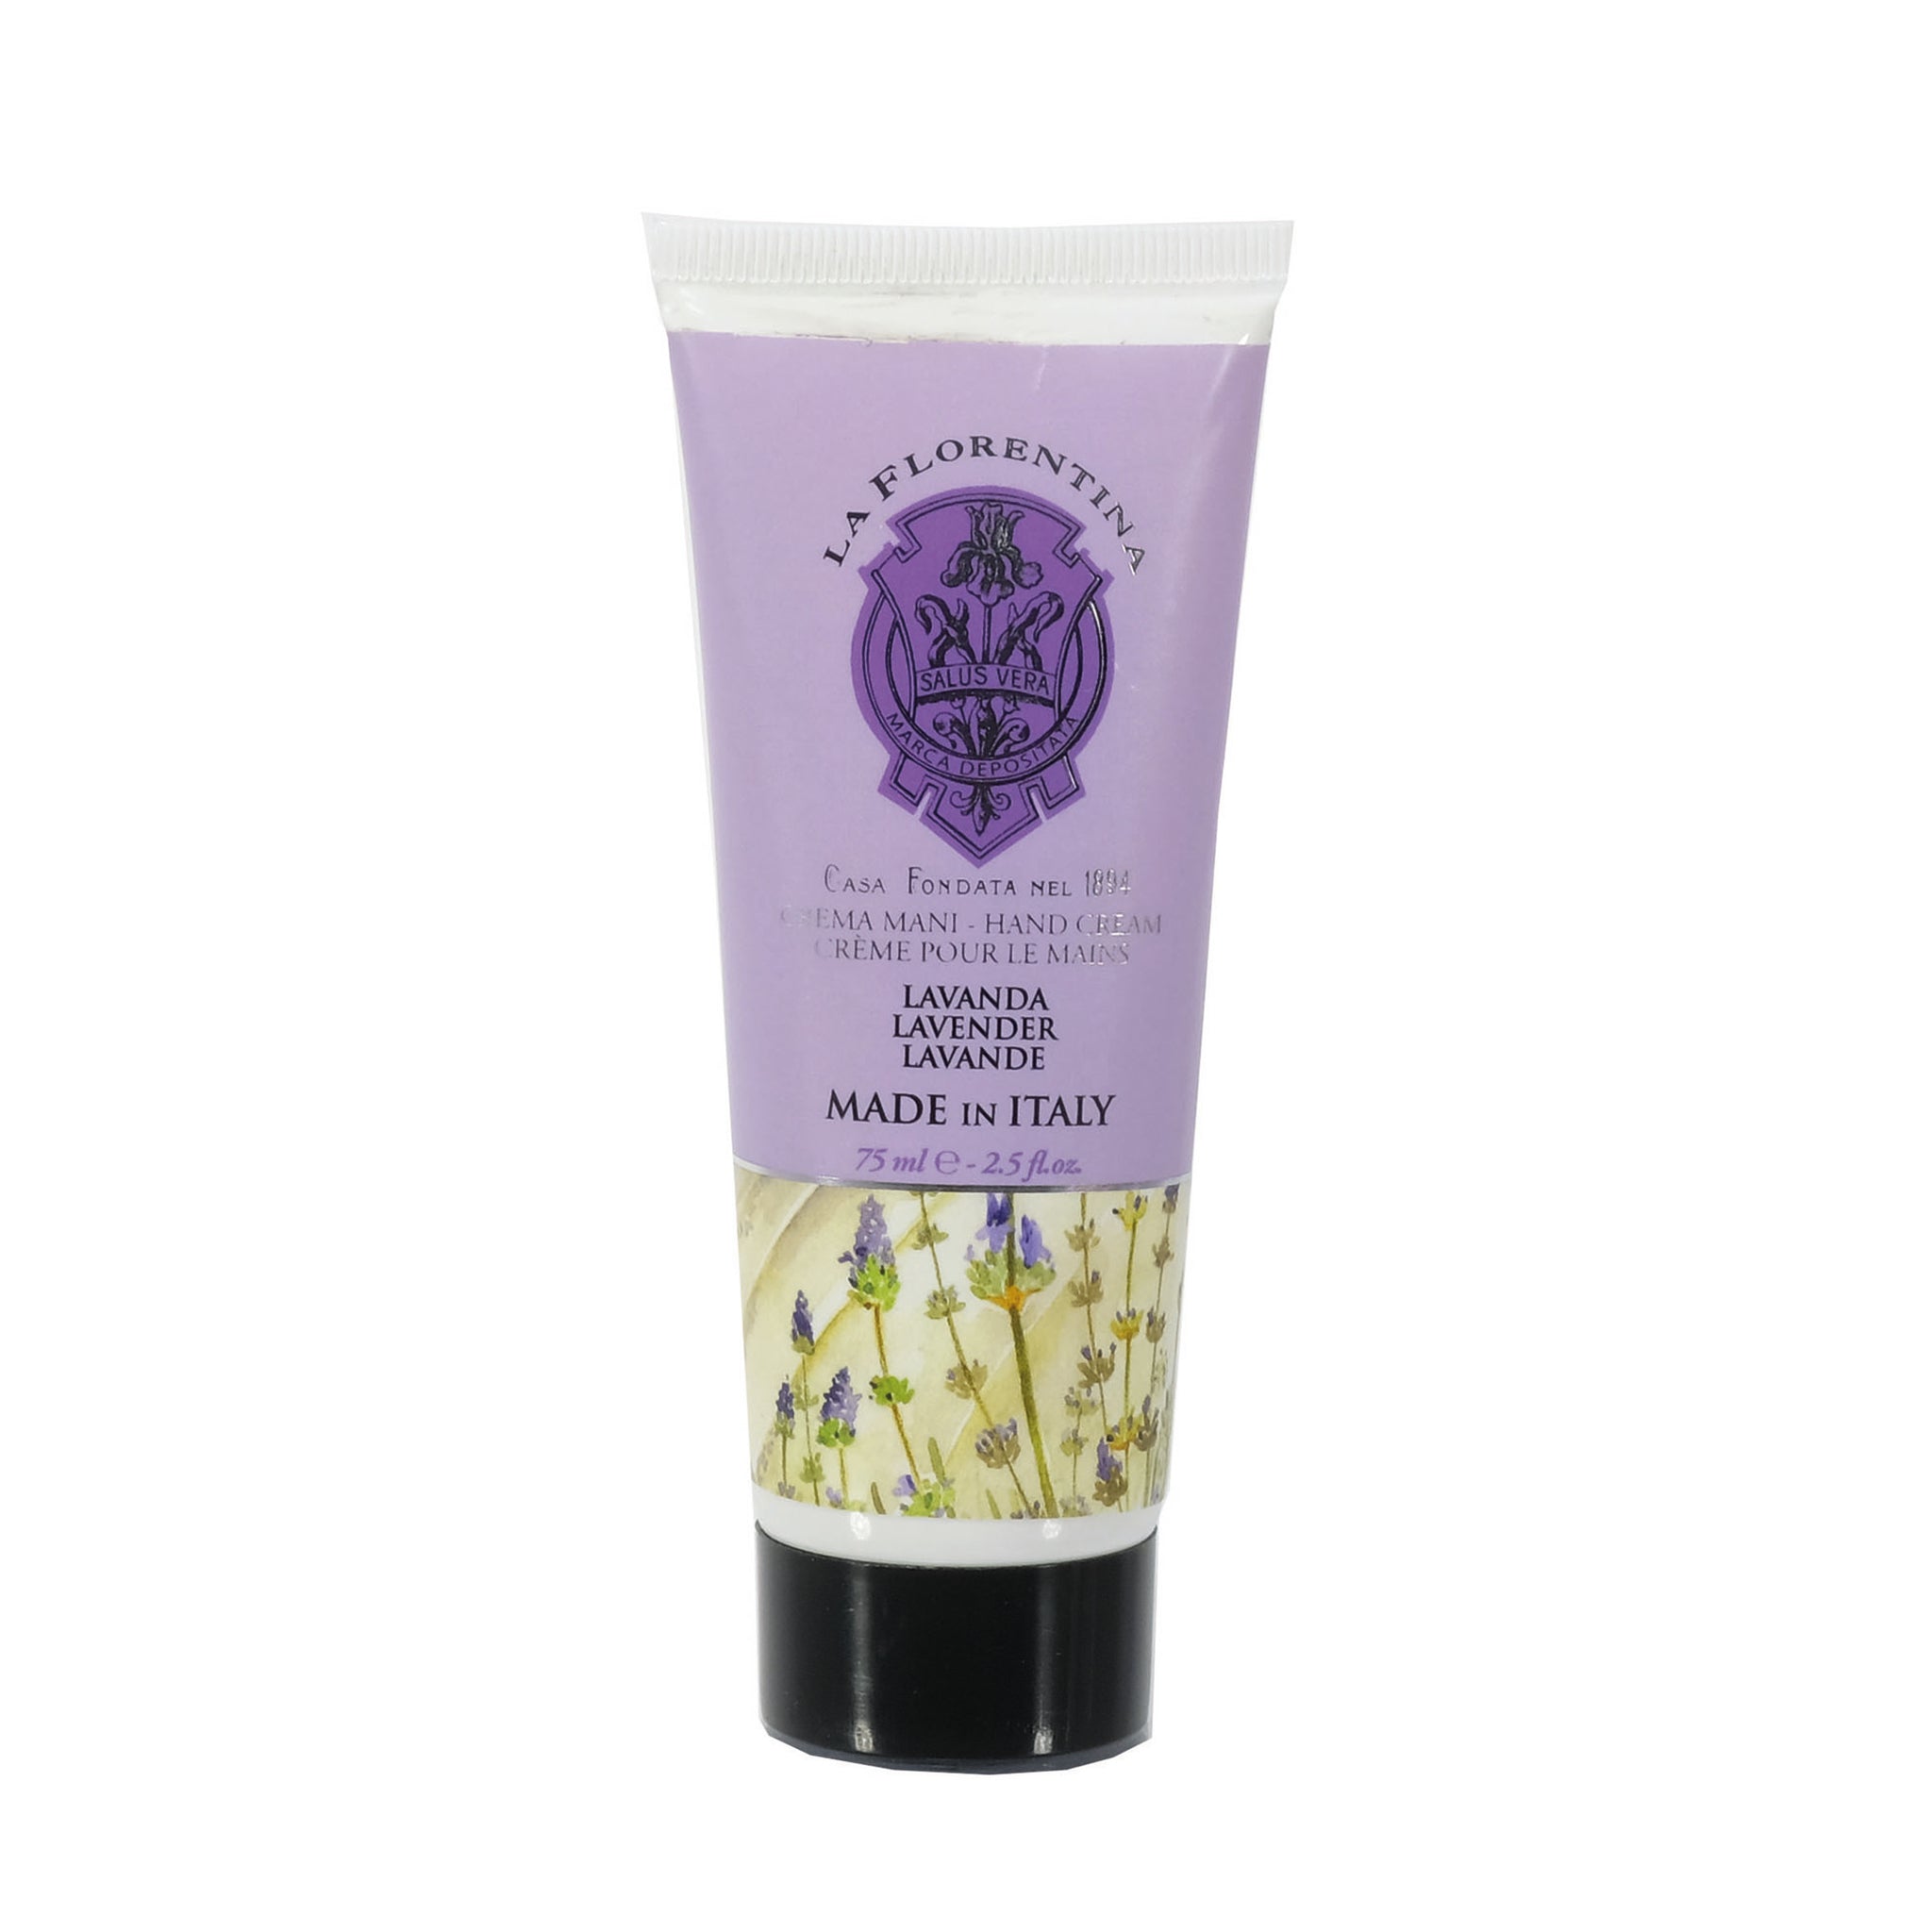 La Florentina Hand Cream Lavender Natural Tuscan Moisturising skincare body products 75ml